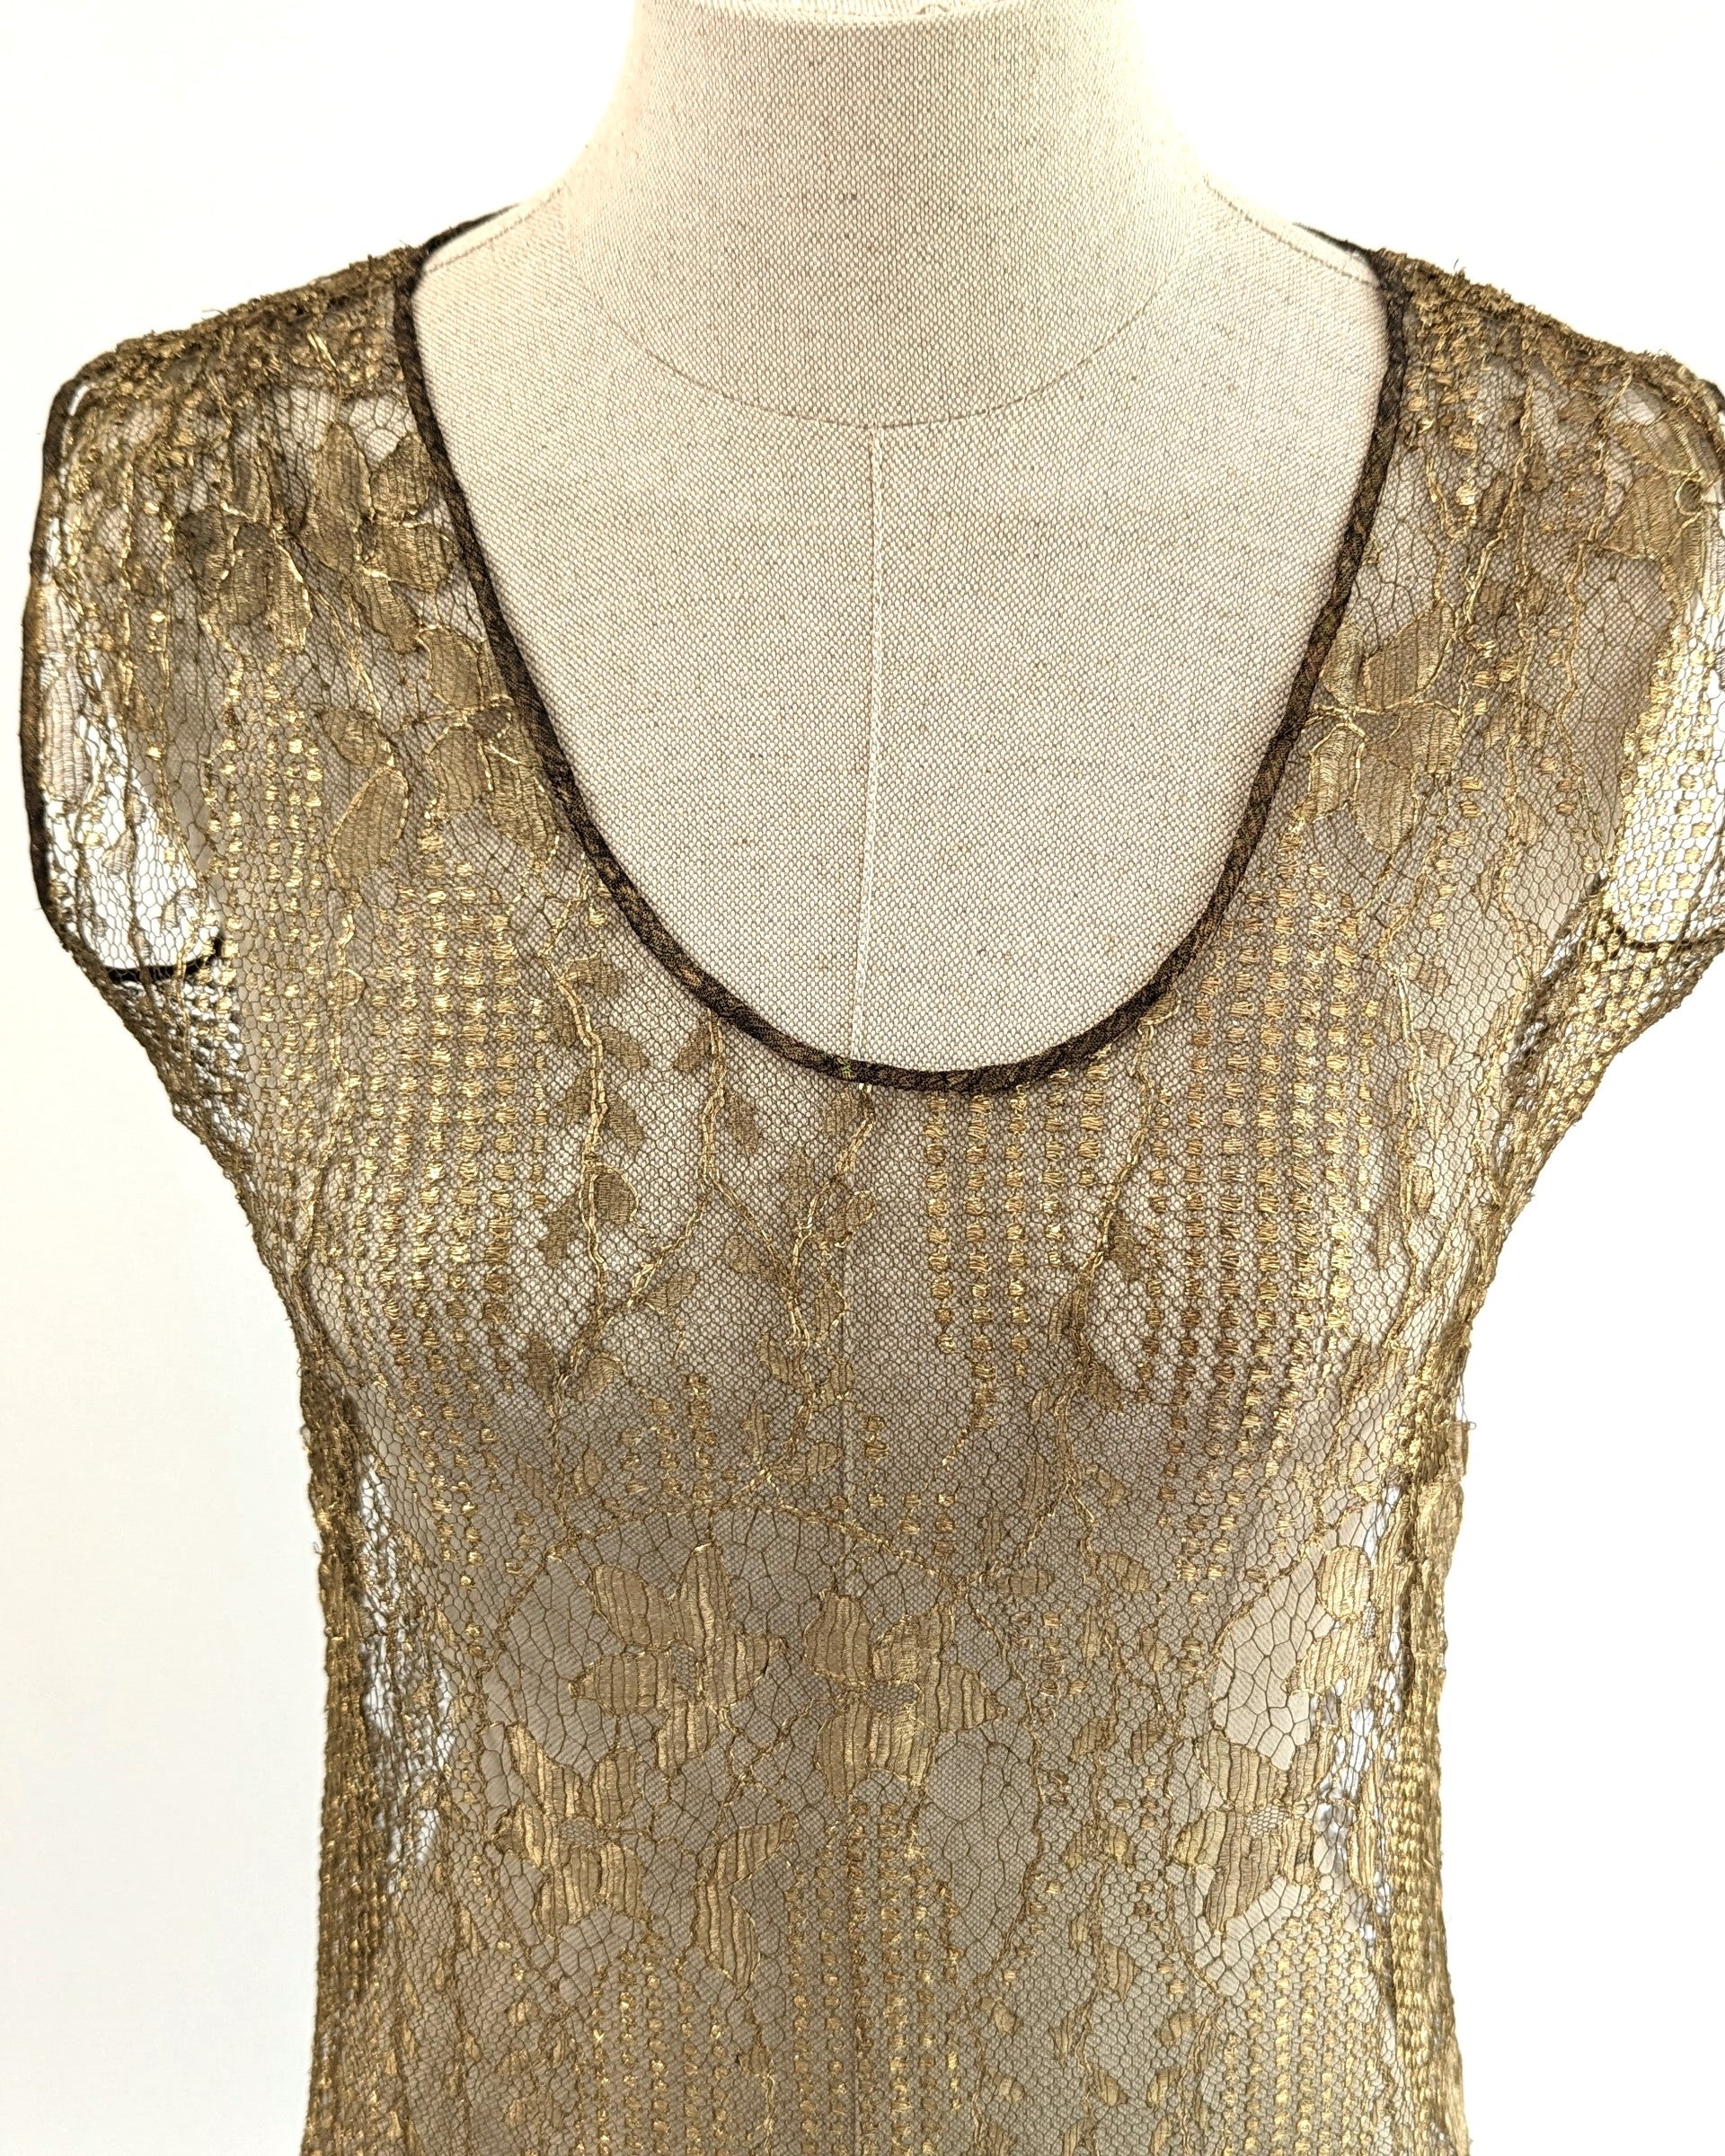 20s flapper dress in gold mesh